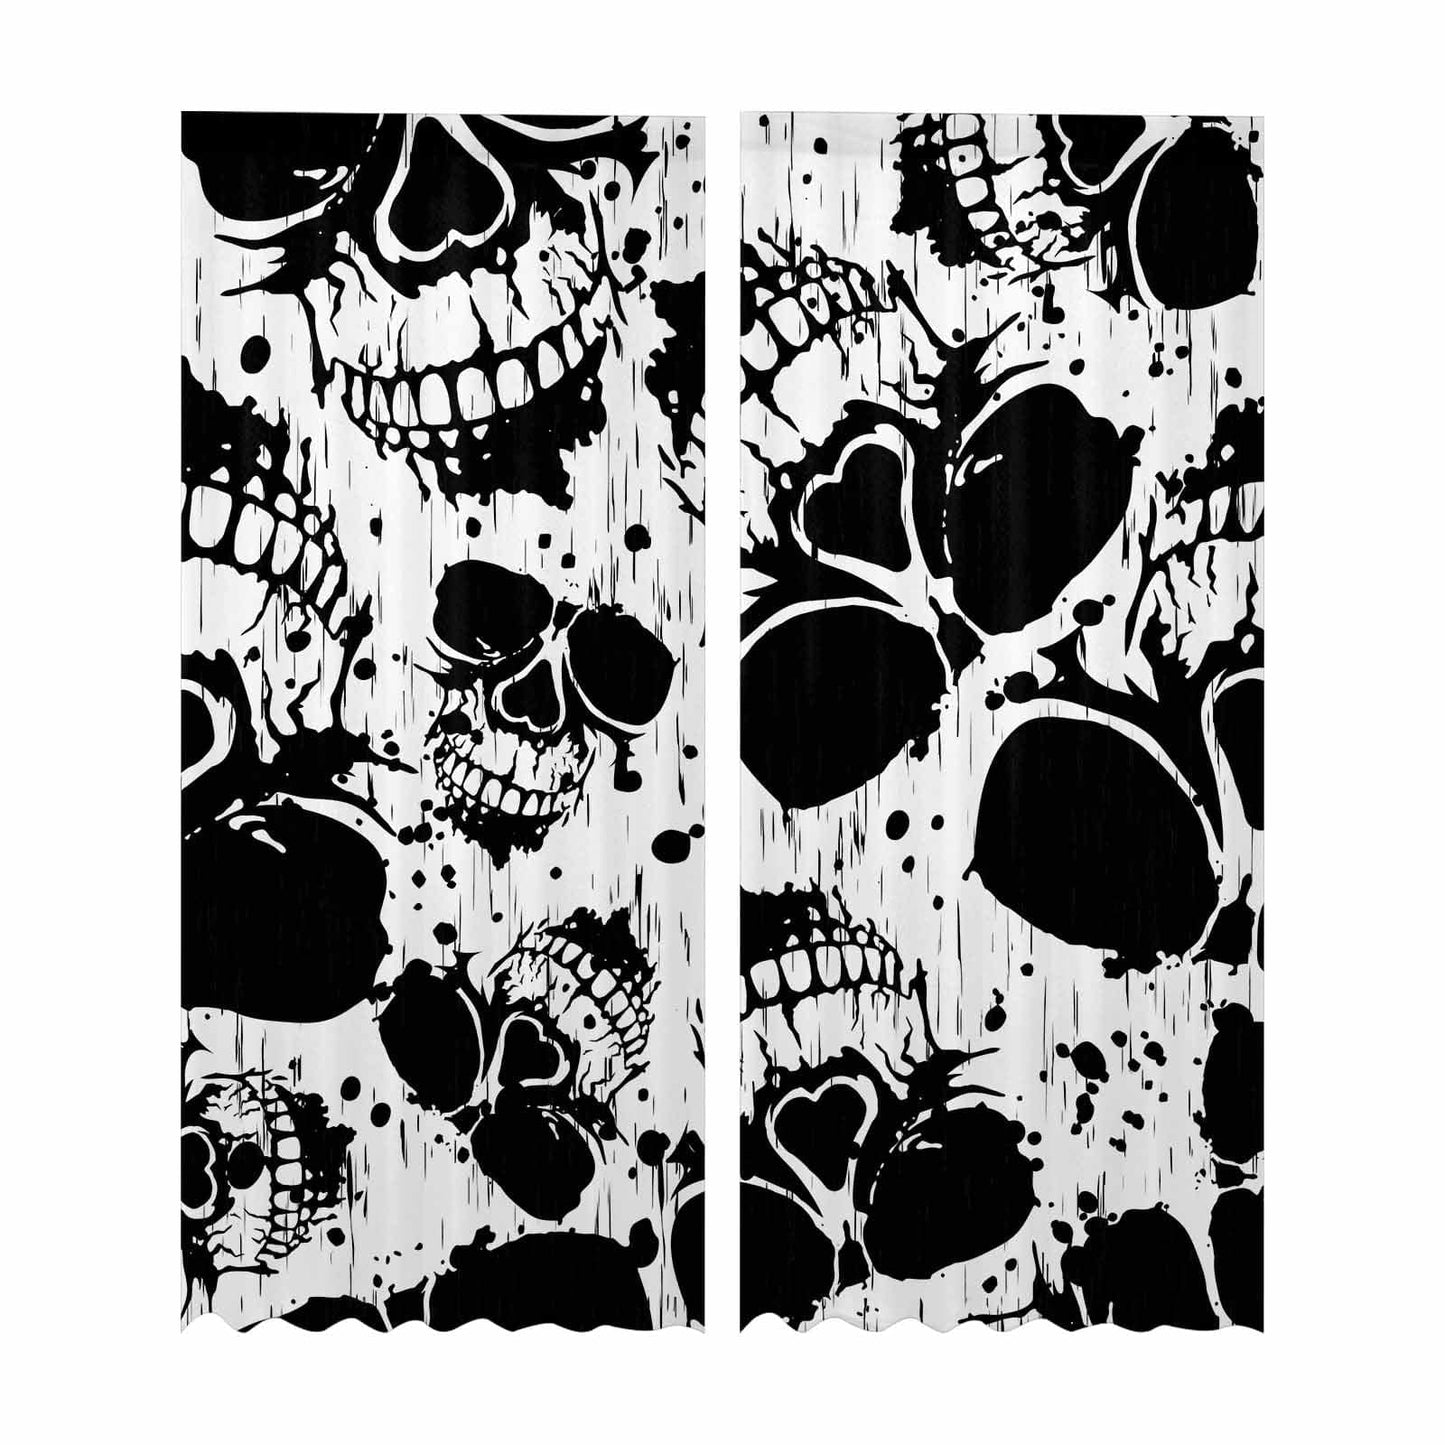 Sheer 2 Panel Window Curtains in Grunge Halloween Skulls